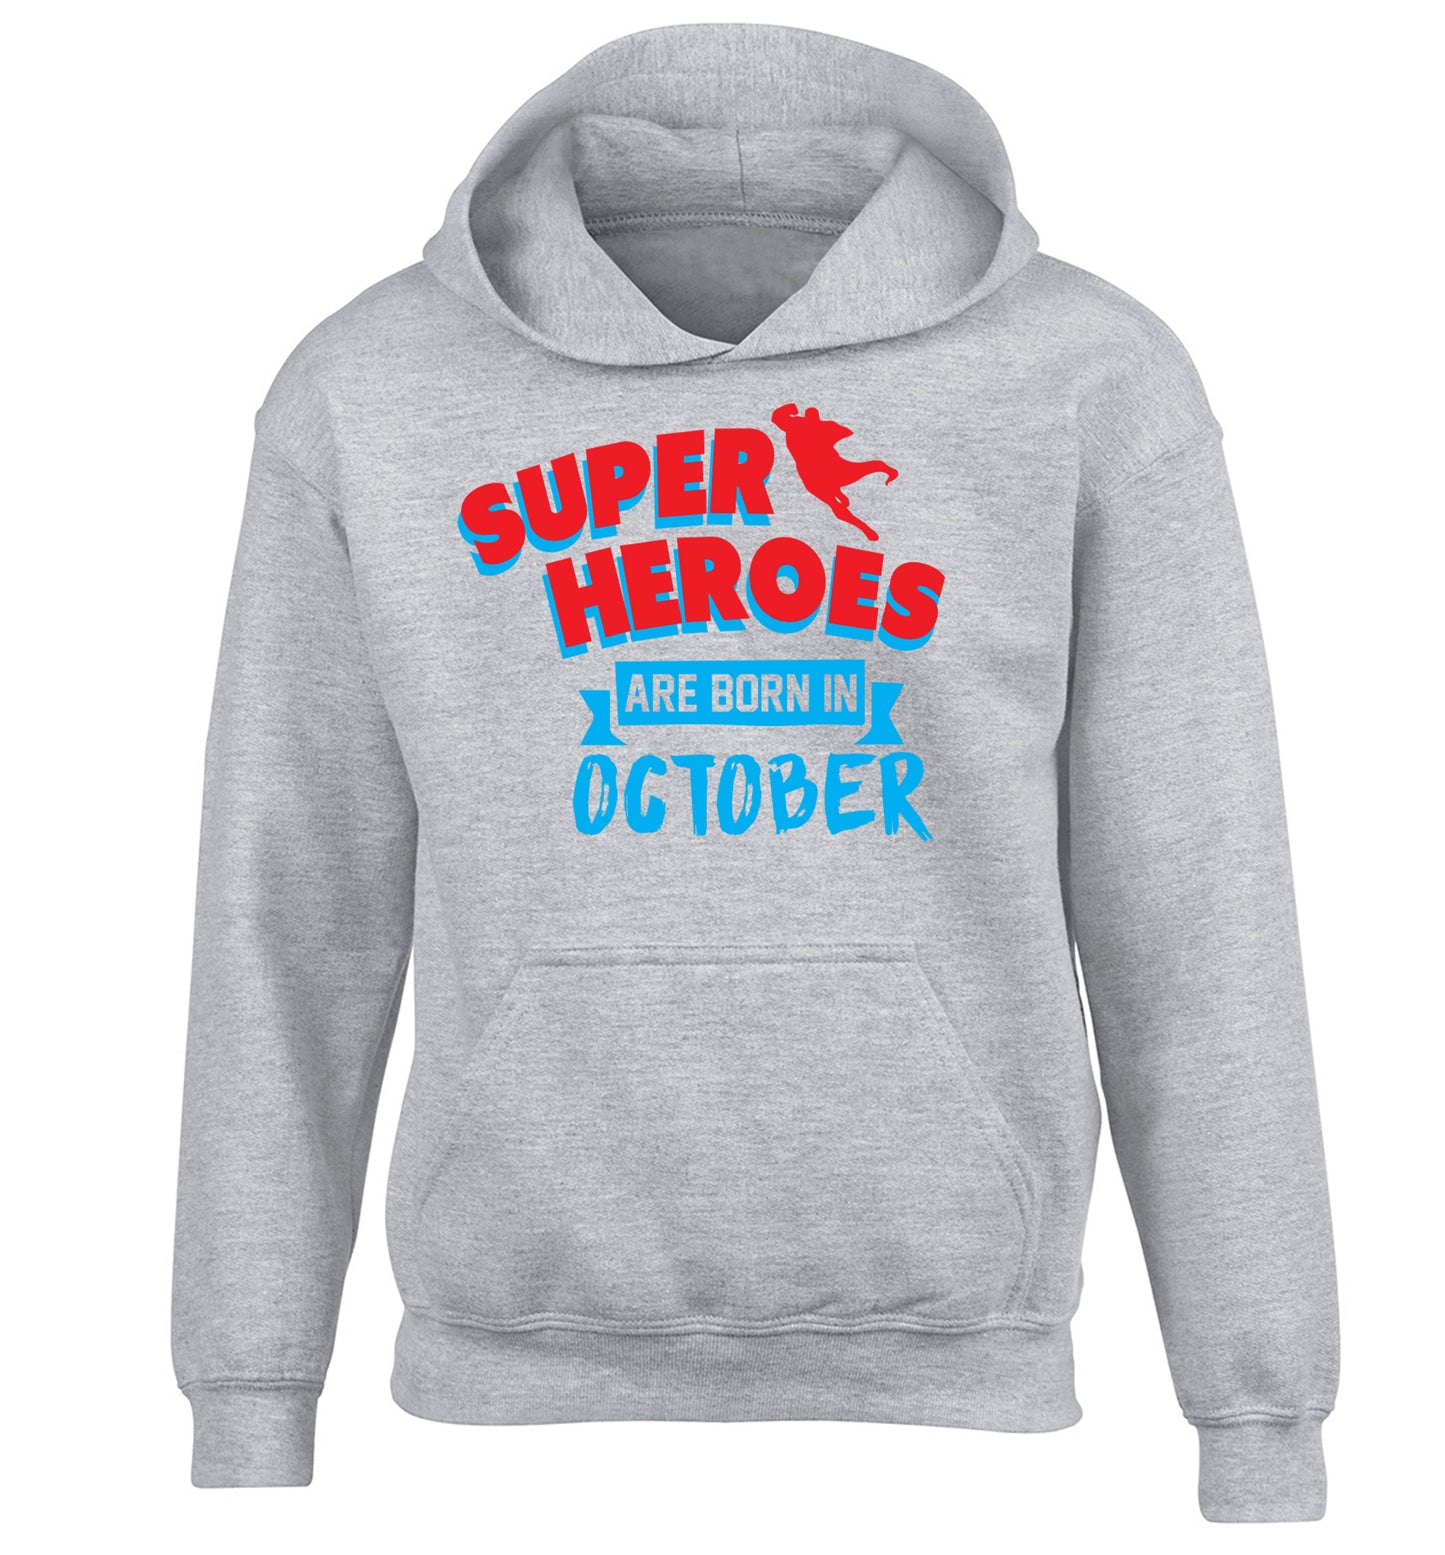 Superheroes are born in October children's grey hoodie 12-13 Years